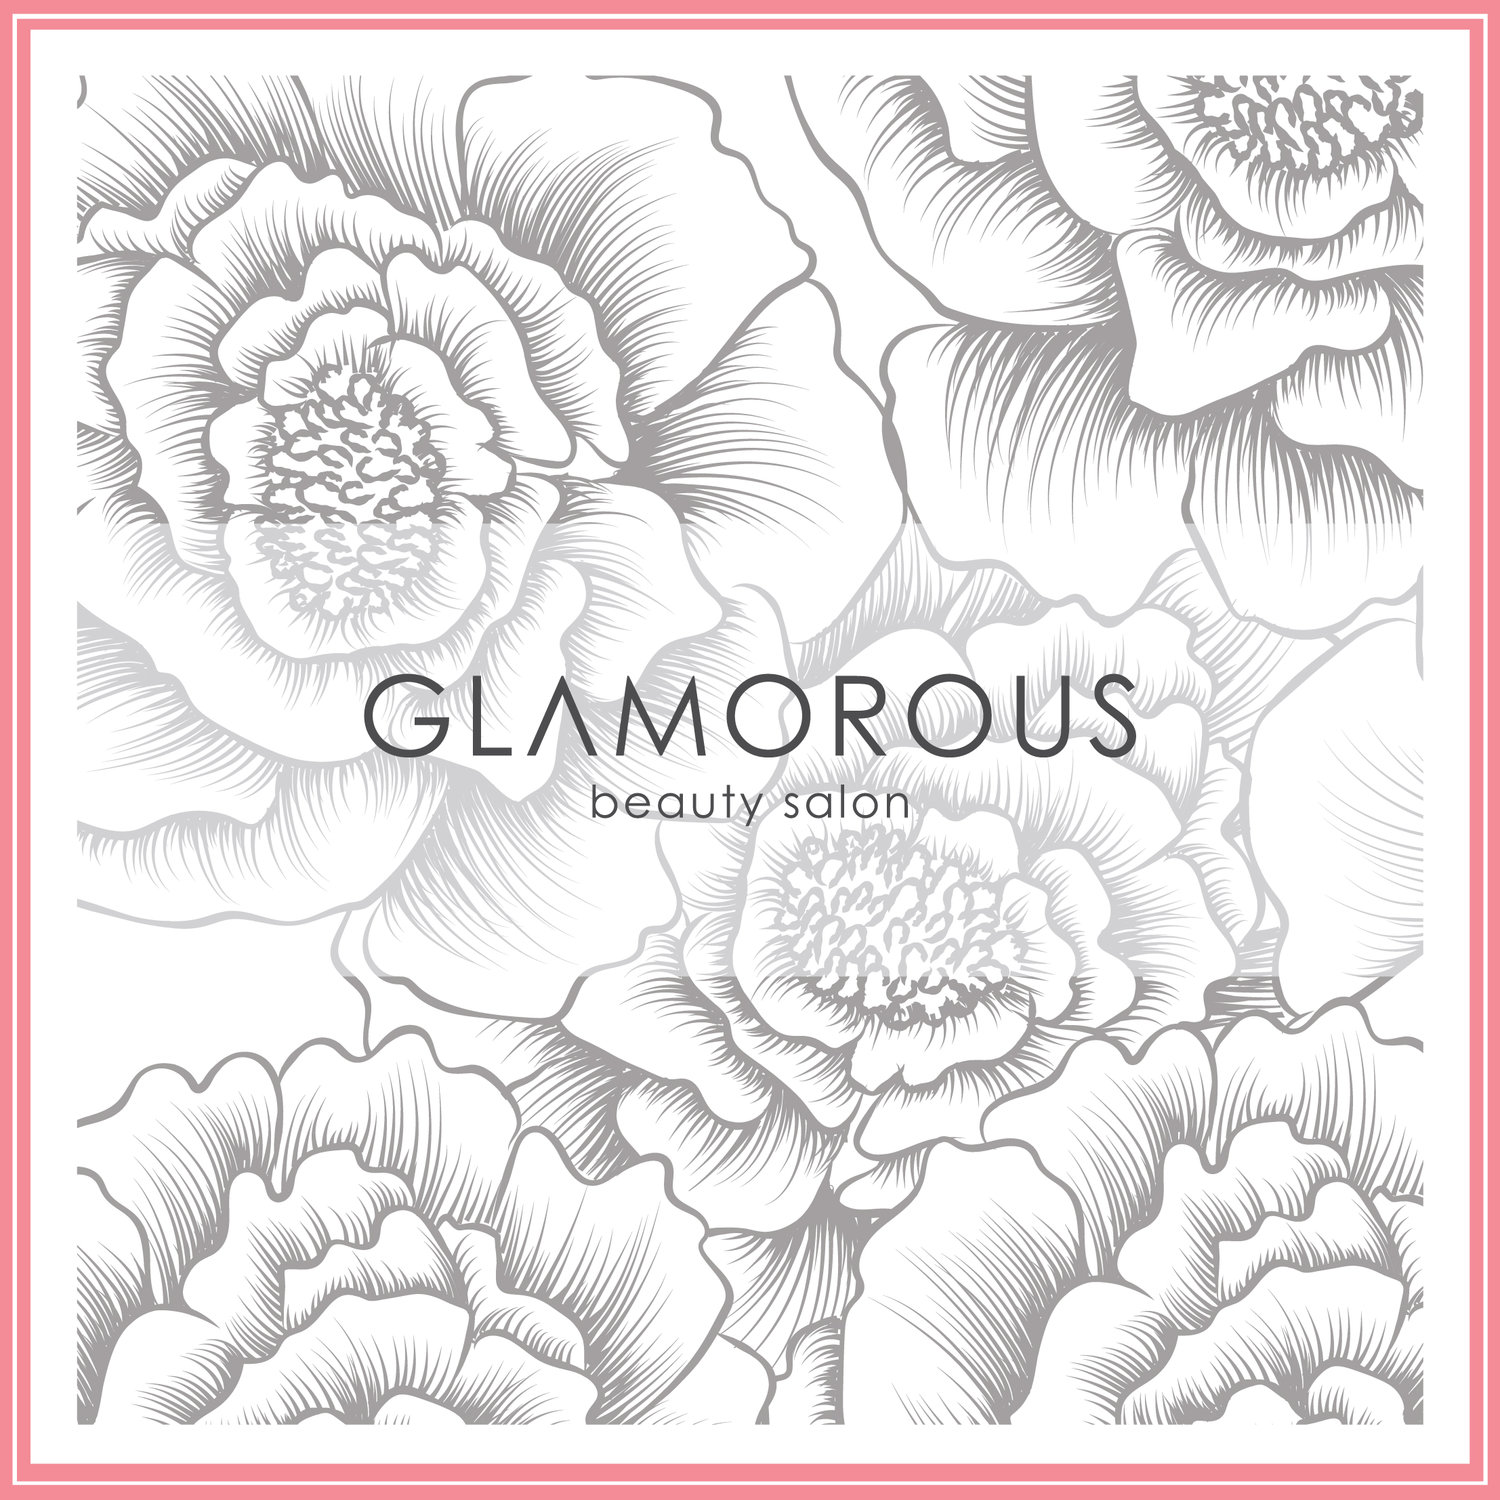 Glamorous Logo